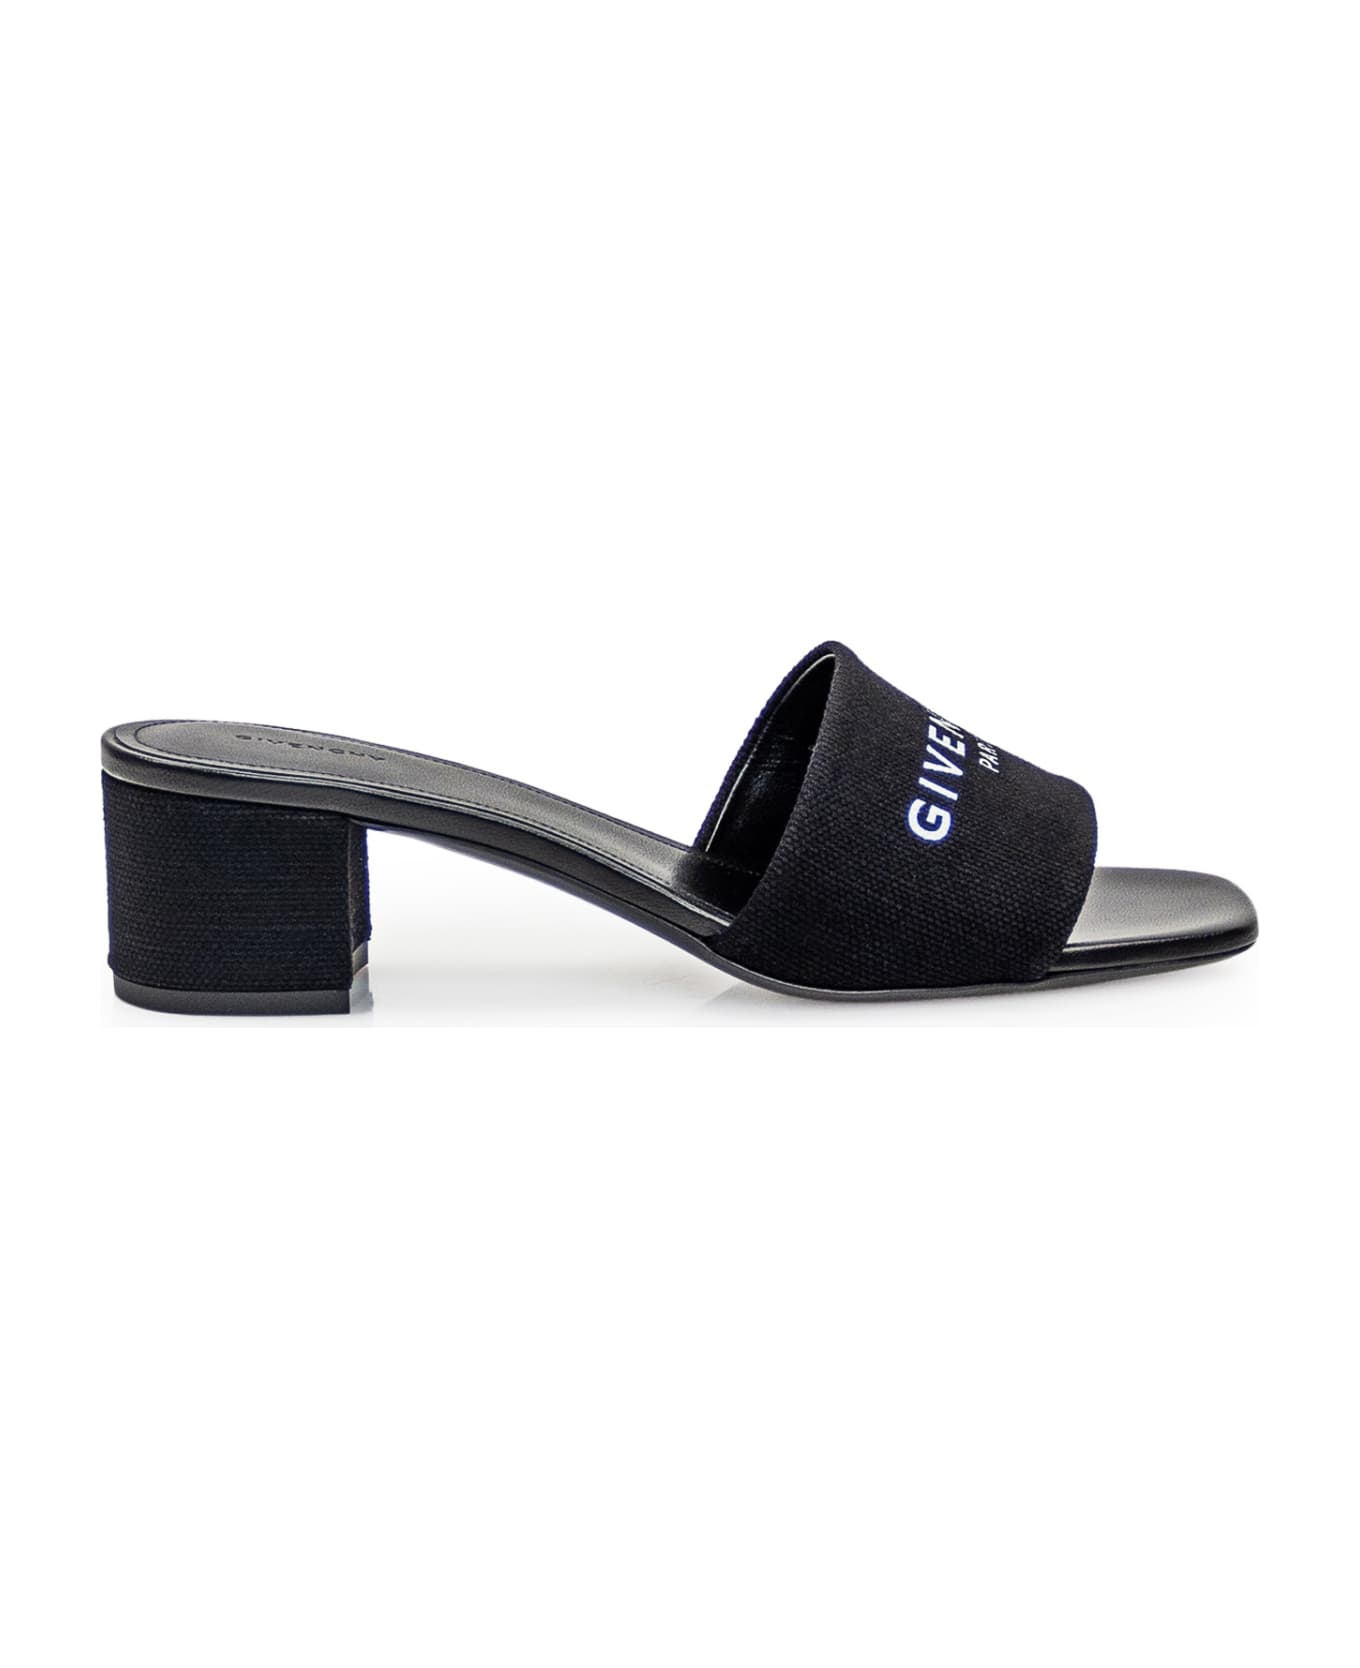 Givenchy 4g Sandals - black サンダル